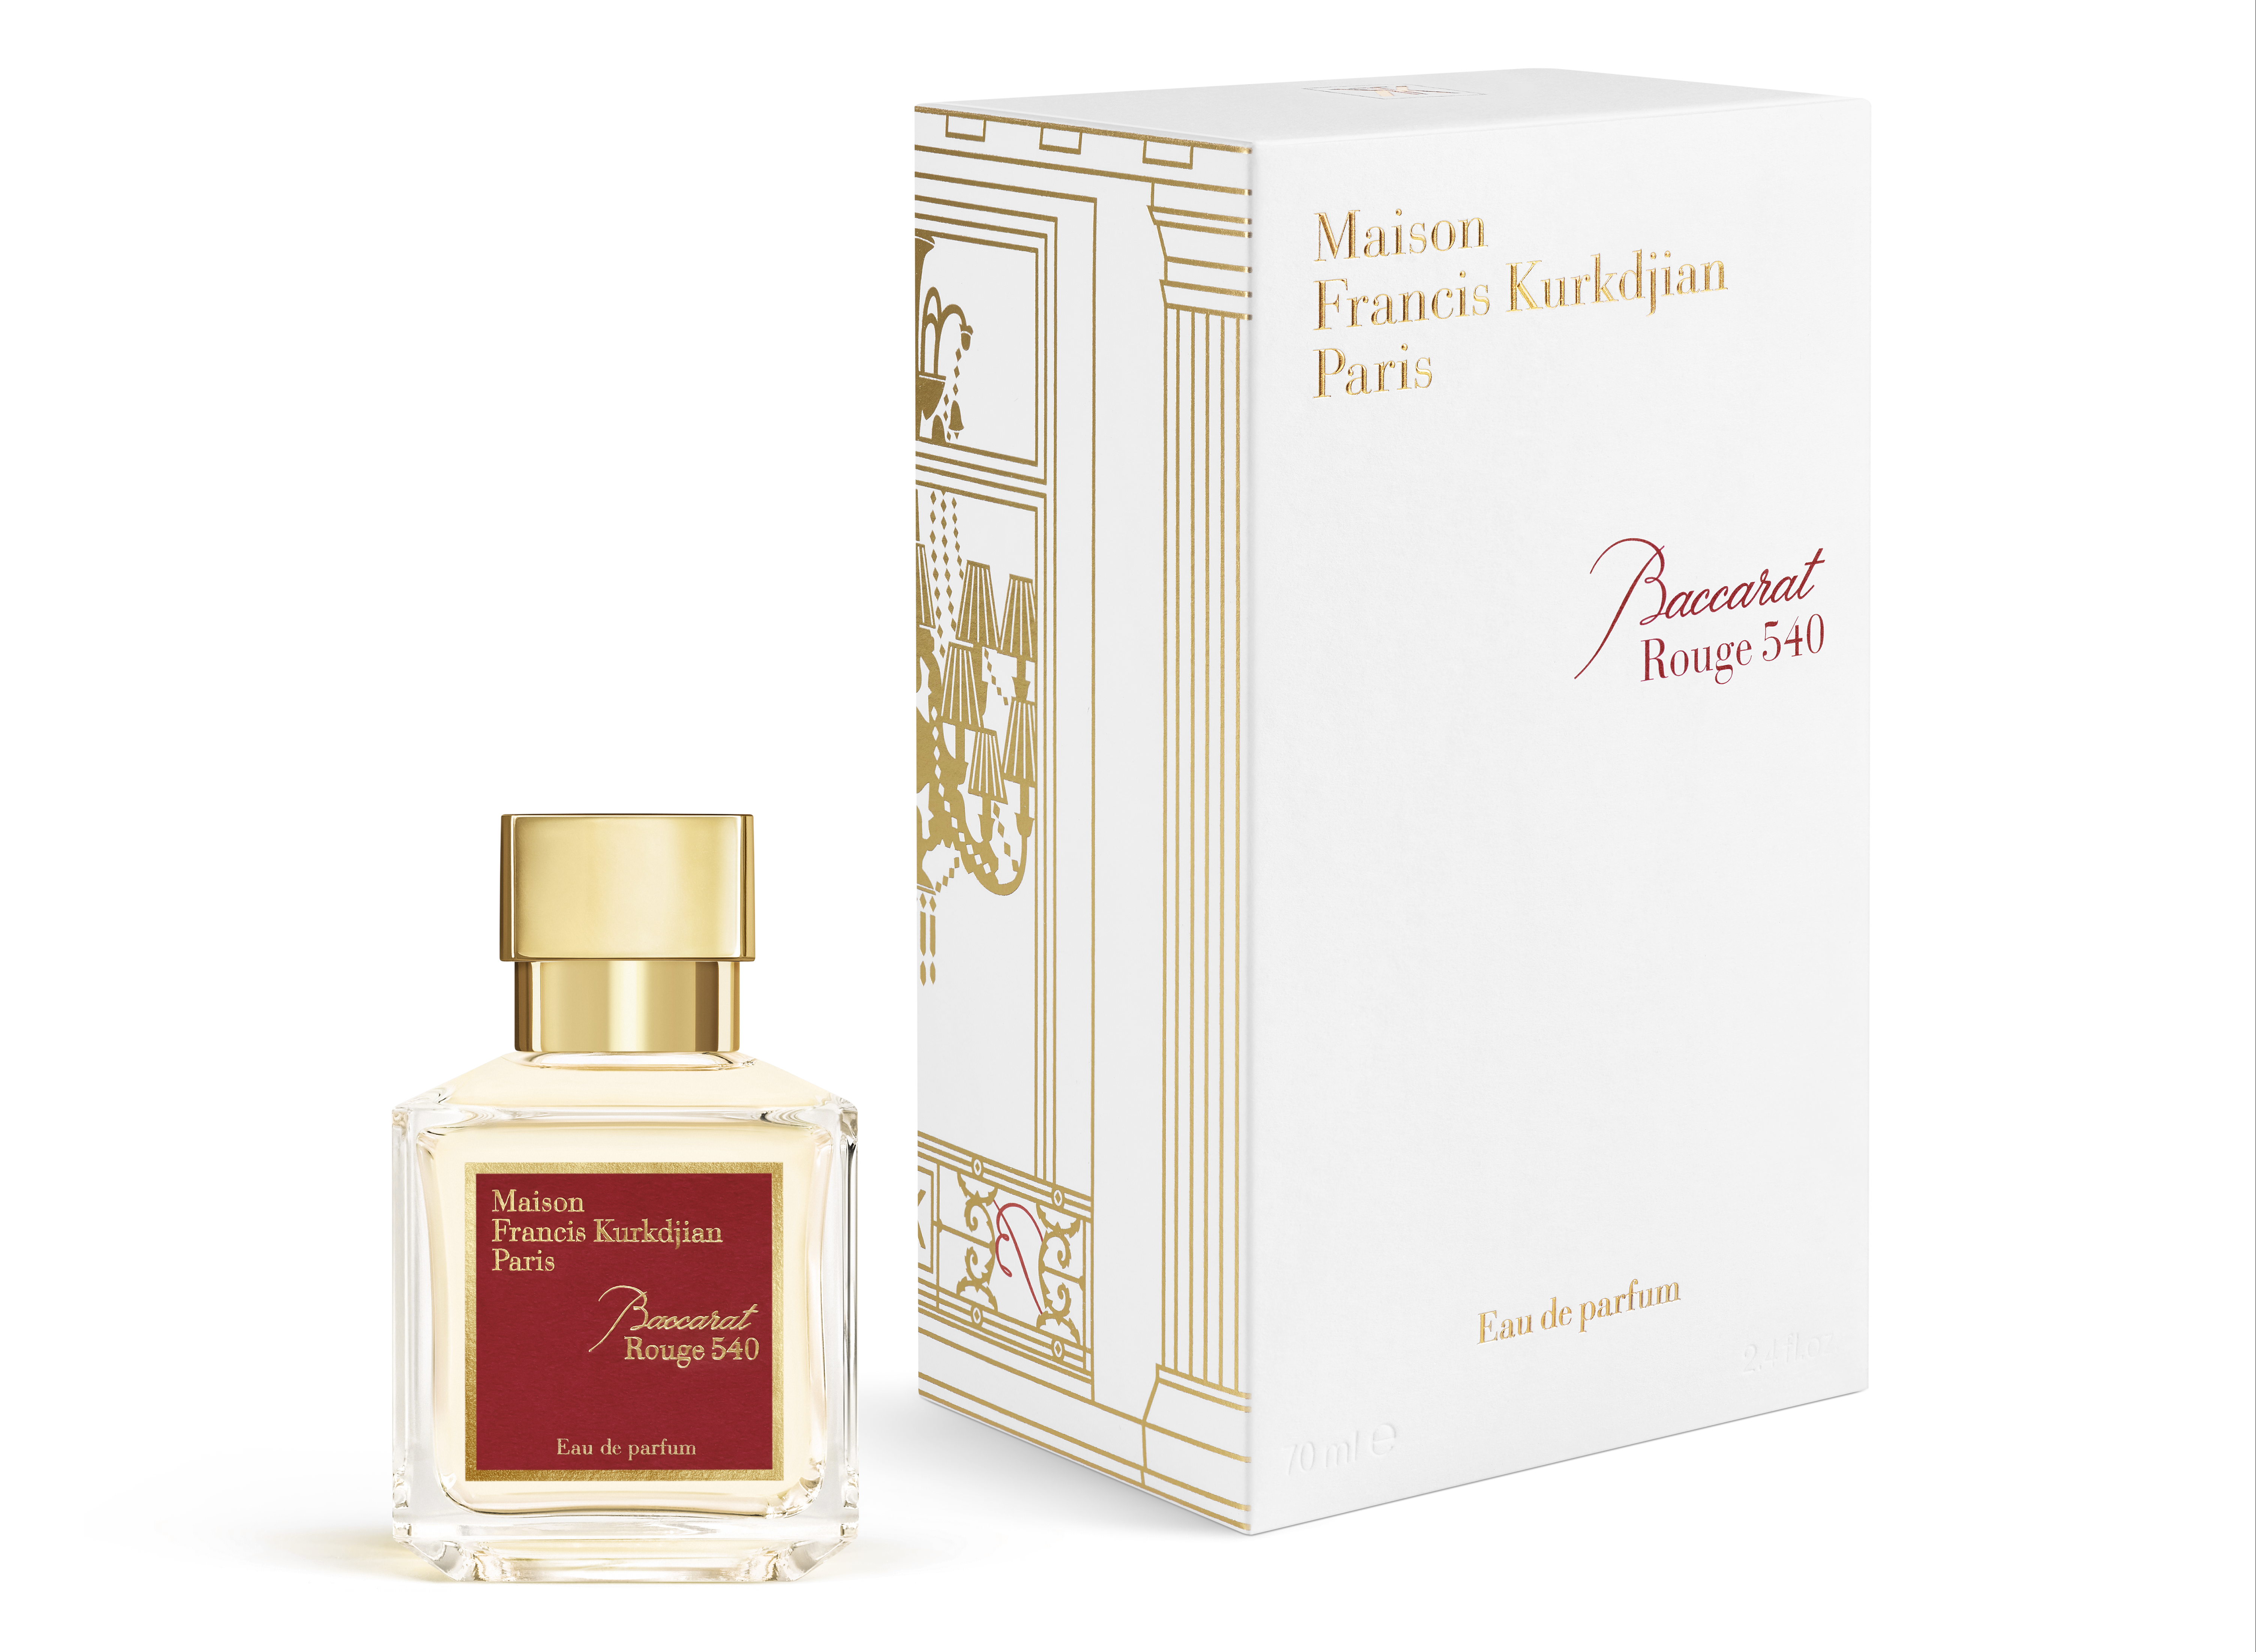 Maison Francis Kurkdjian Perfumer Interview